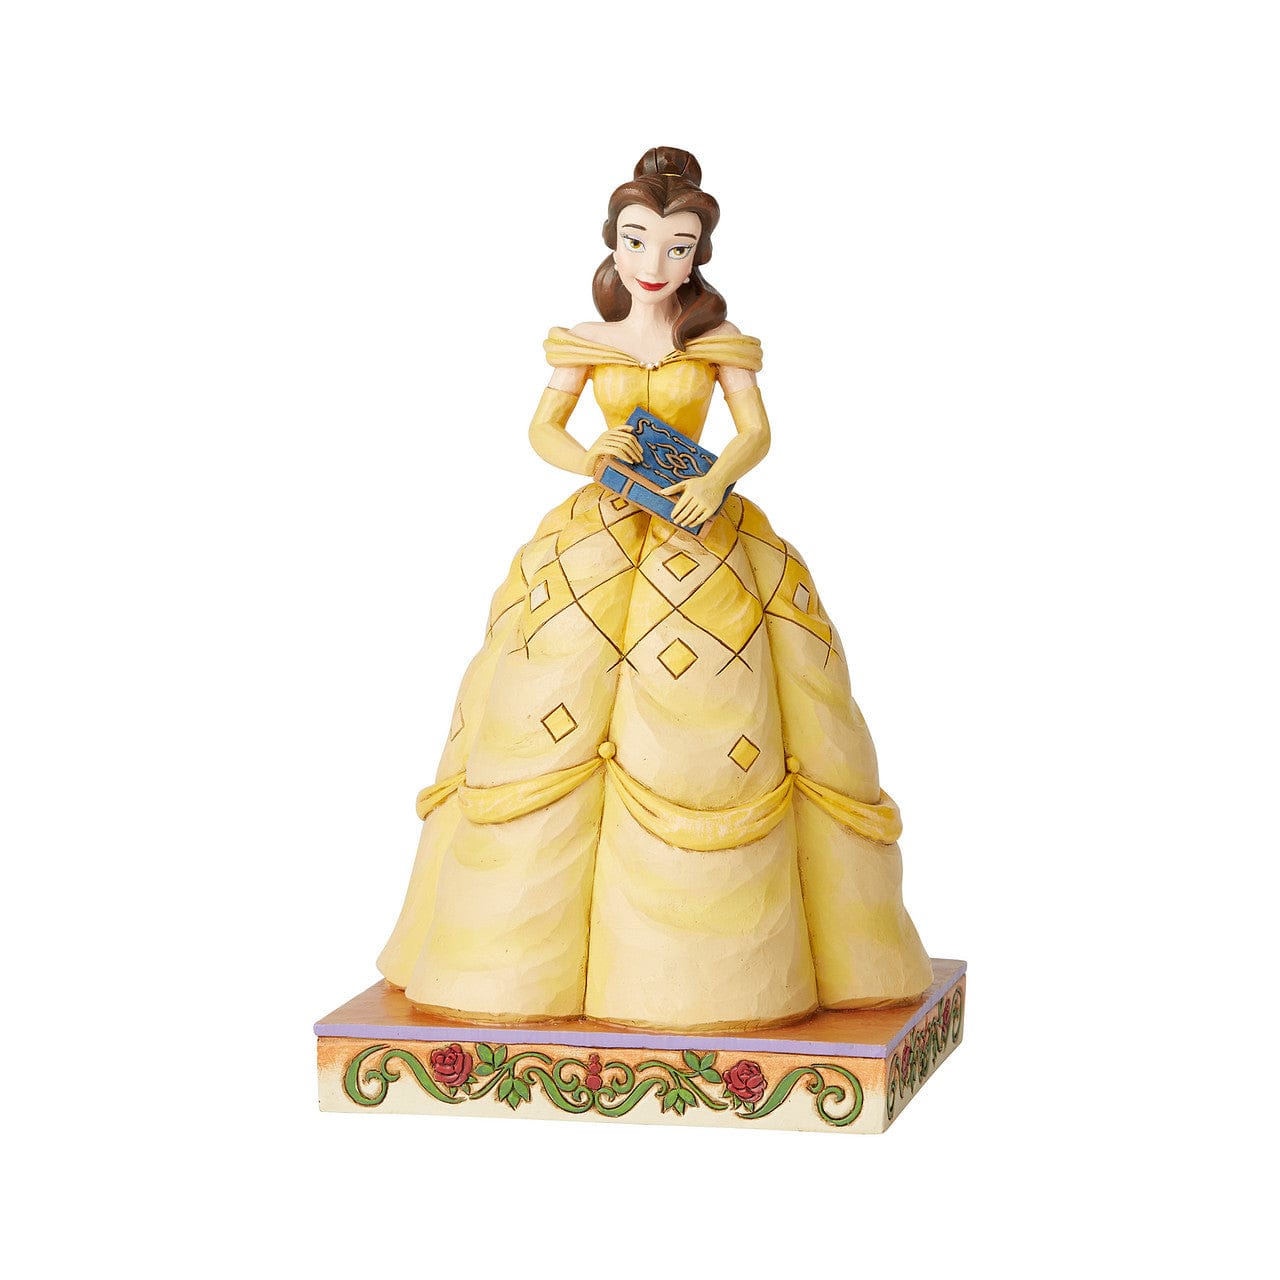 Disney Disney Ornament Disney Traditions Figurine - Princess Belle Book-Smart Beauty